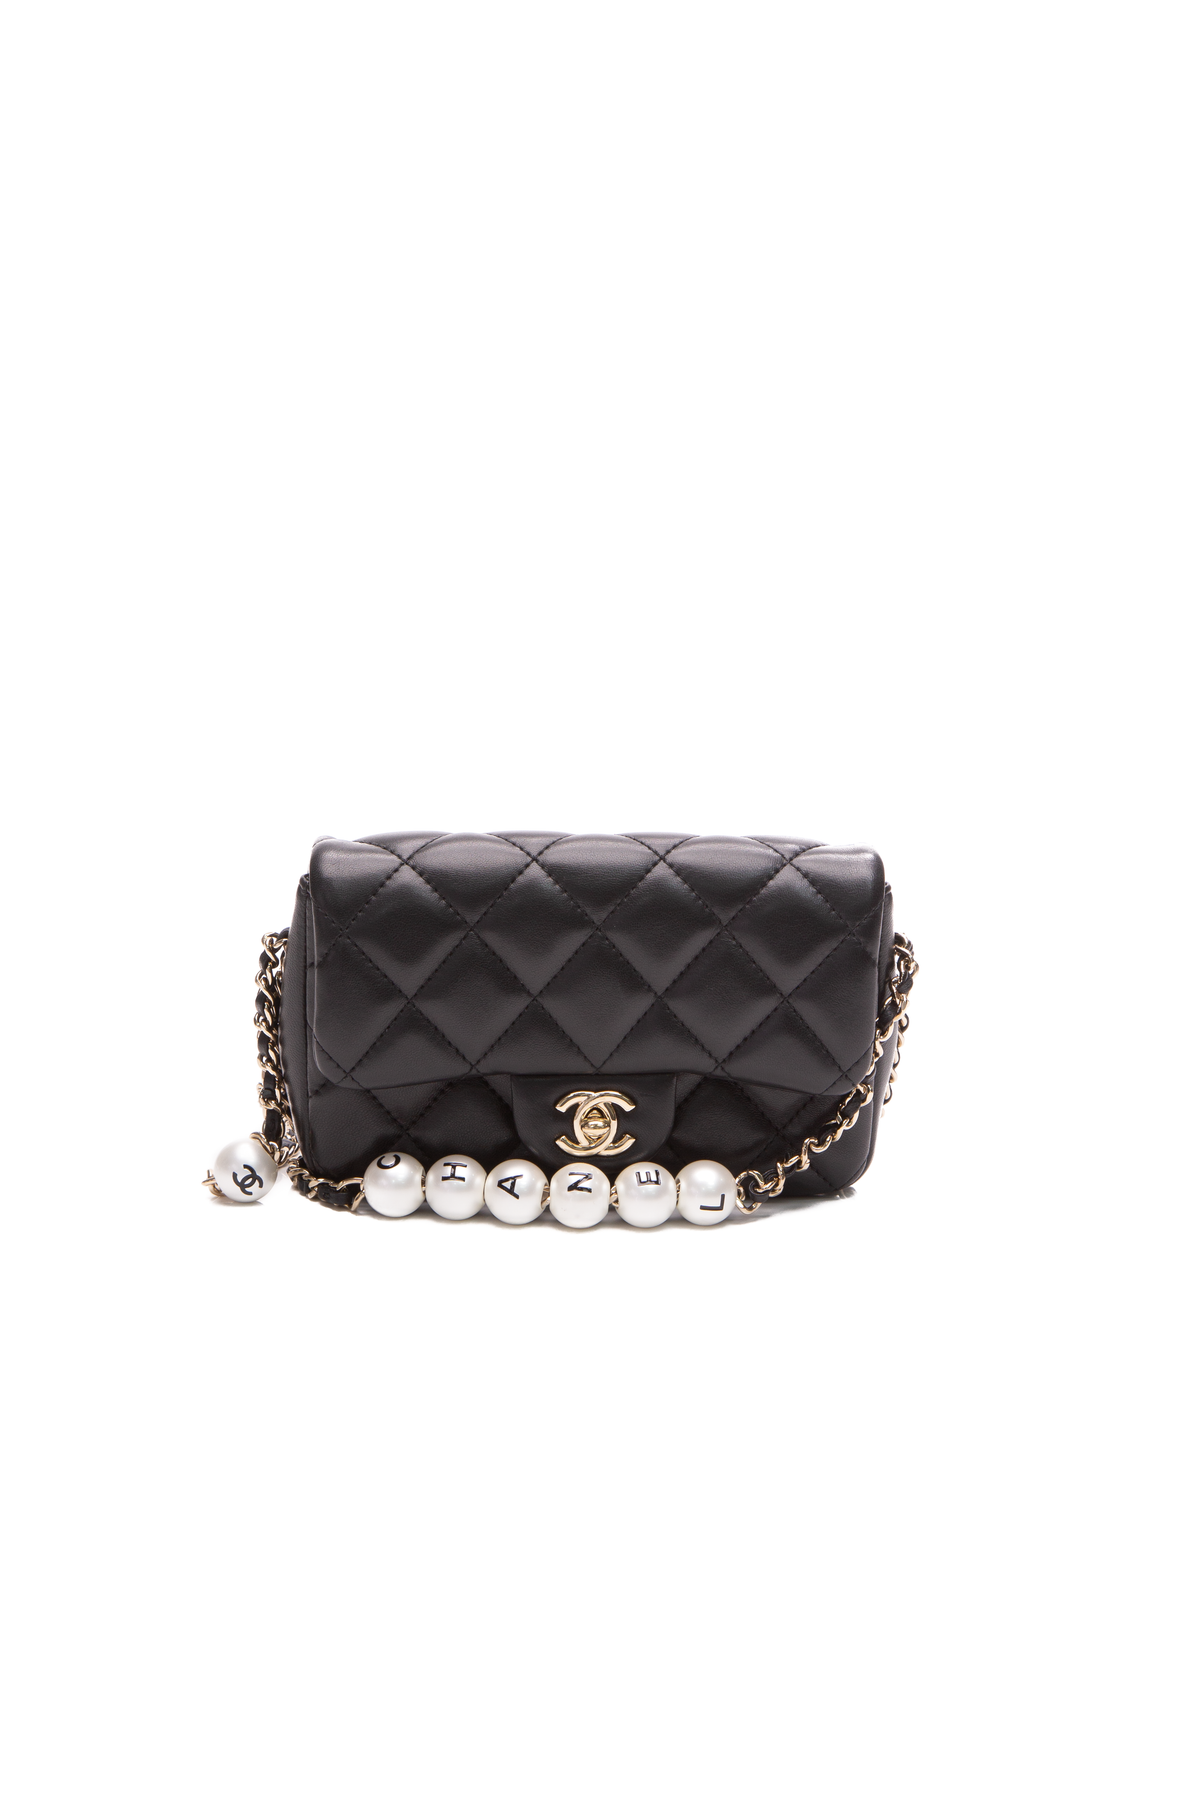 Chanel Mini flap bag My precious pearls